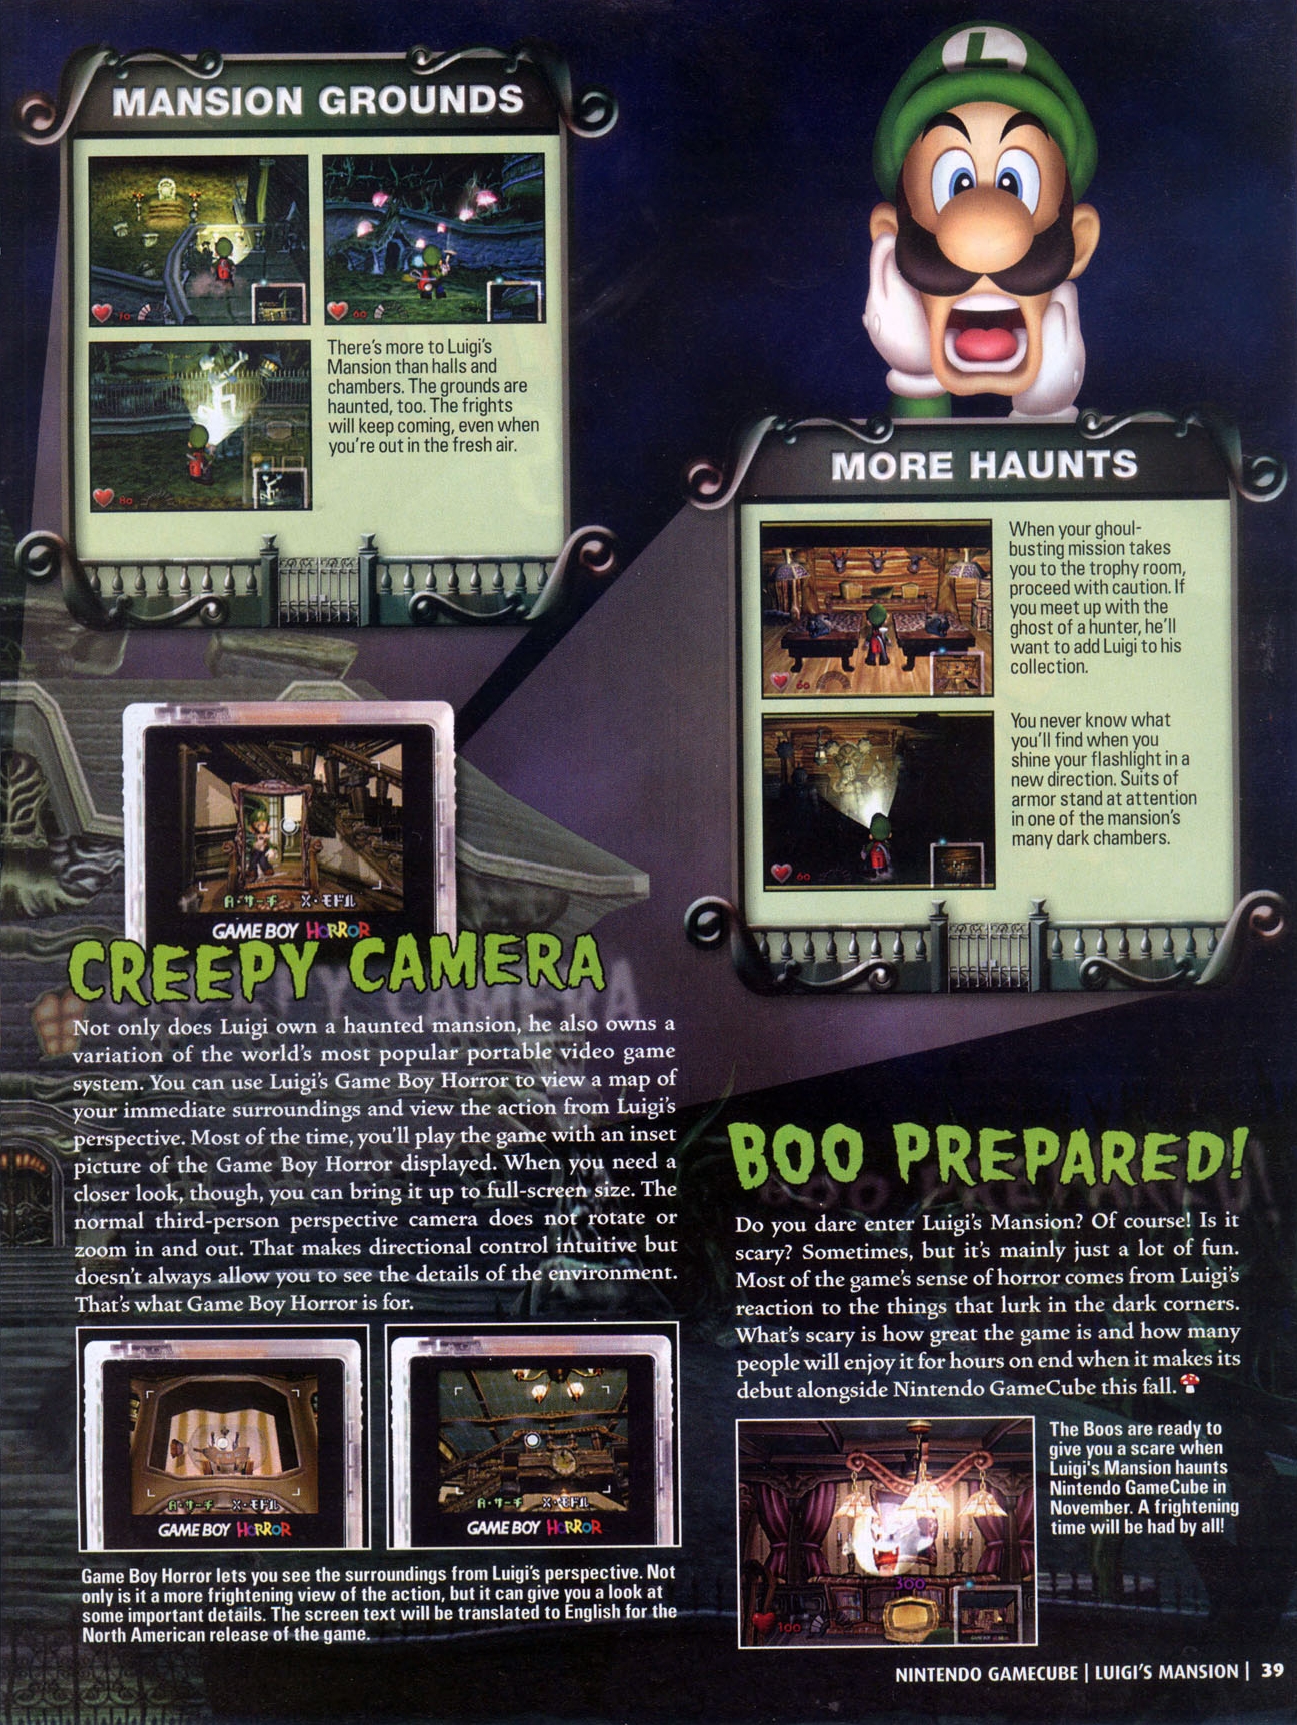 Hunter Ghost, Gaming Urban Legends Wiki